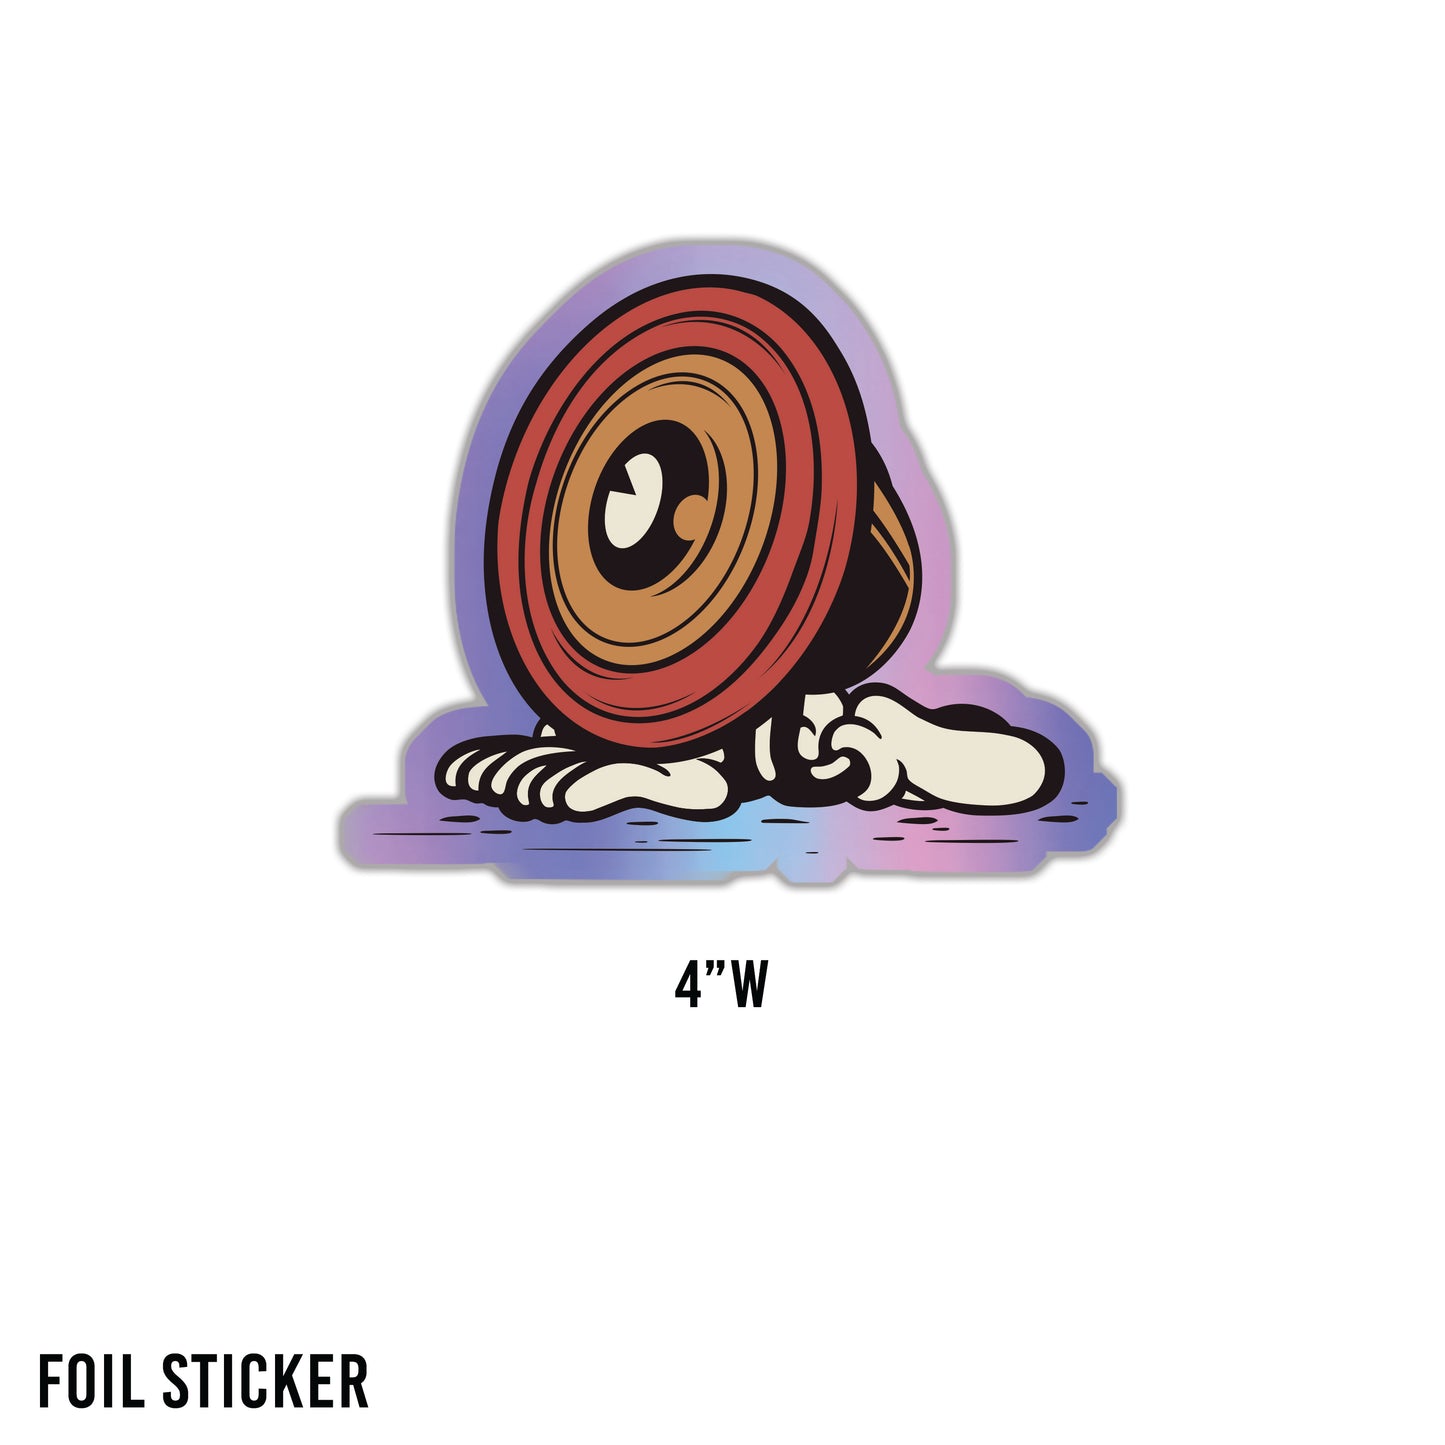 V1 Foil Sticker - Subhead